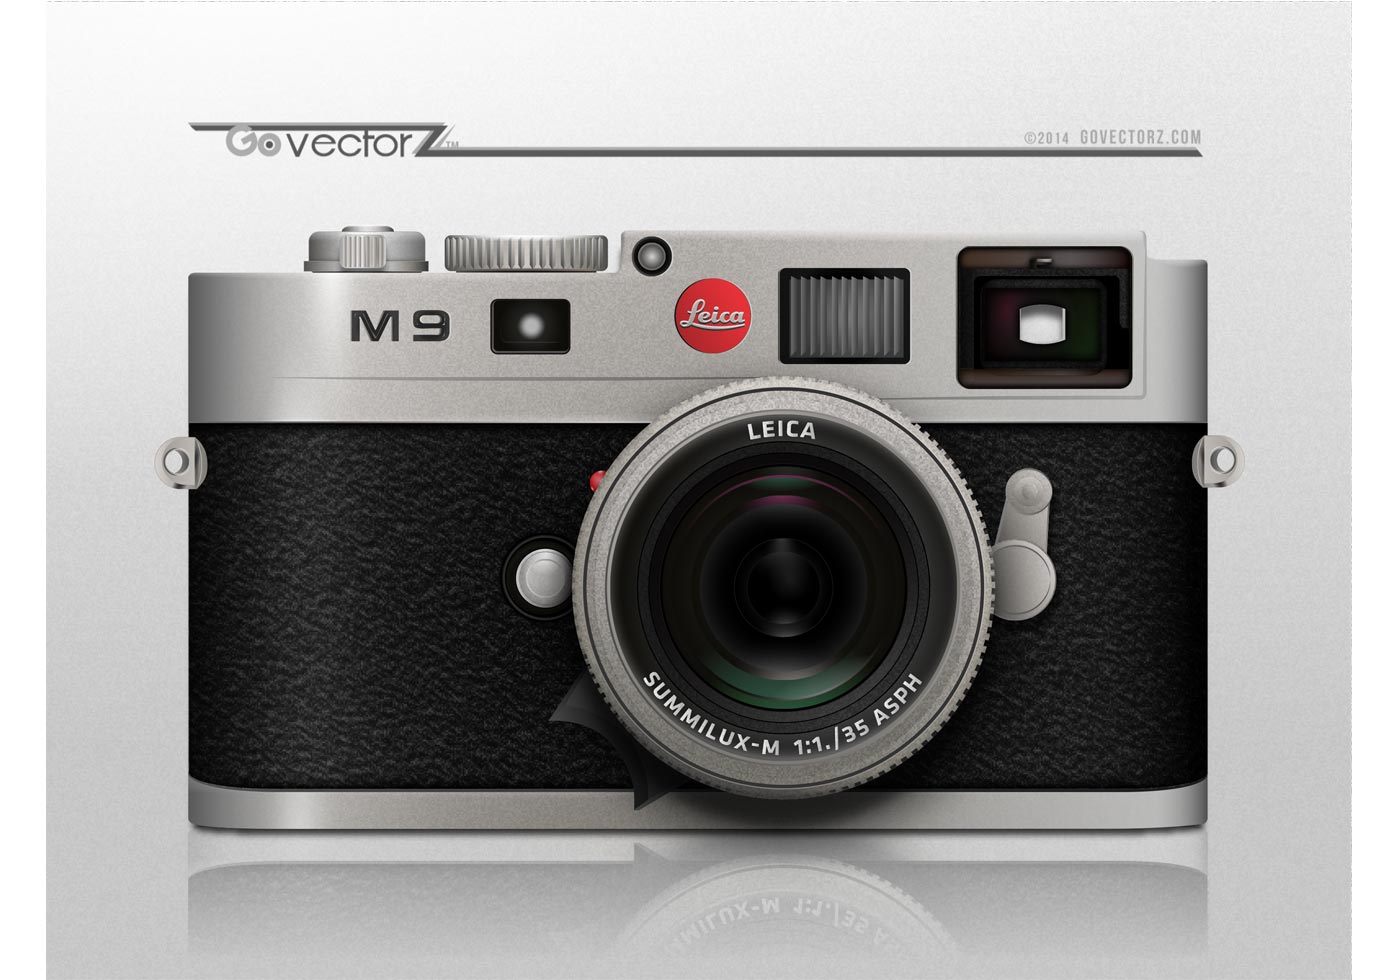 Download Leica M9 Camera Vector | Free Vector Art at Vecteezy!